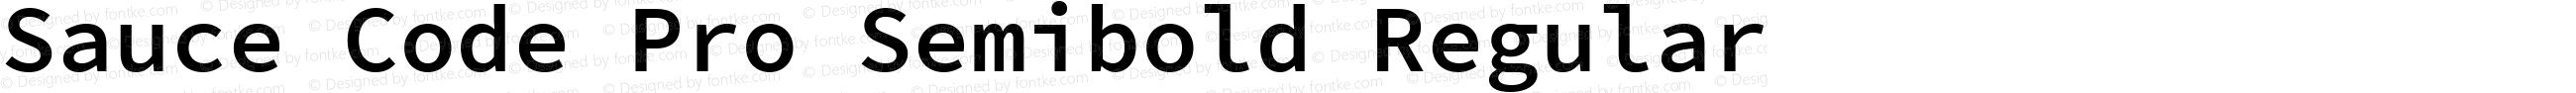 Sauce Code Pro Semibold Nerd Font Plus Font Awesome Windows Compatible